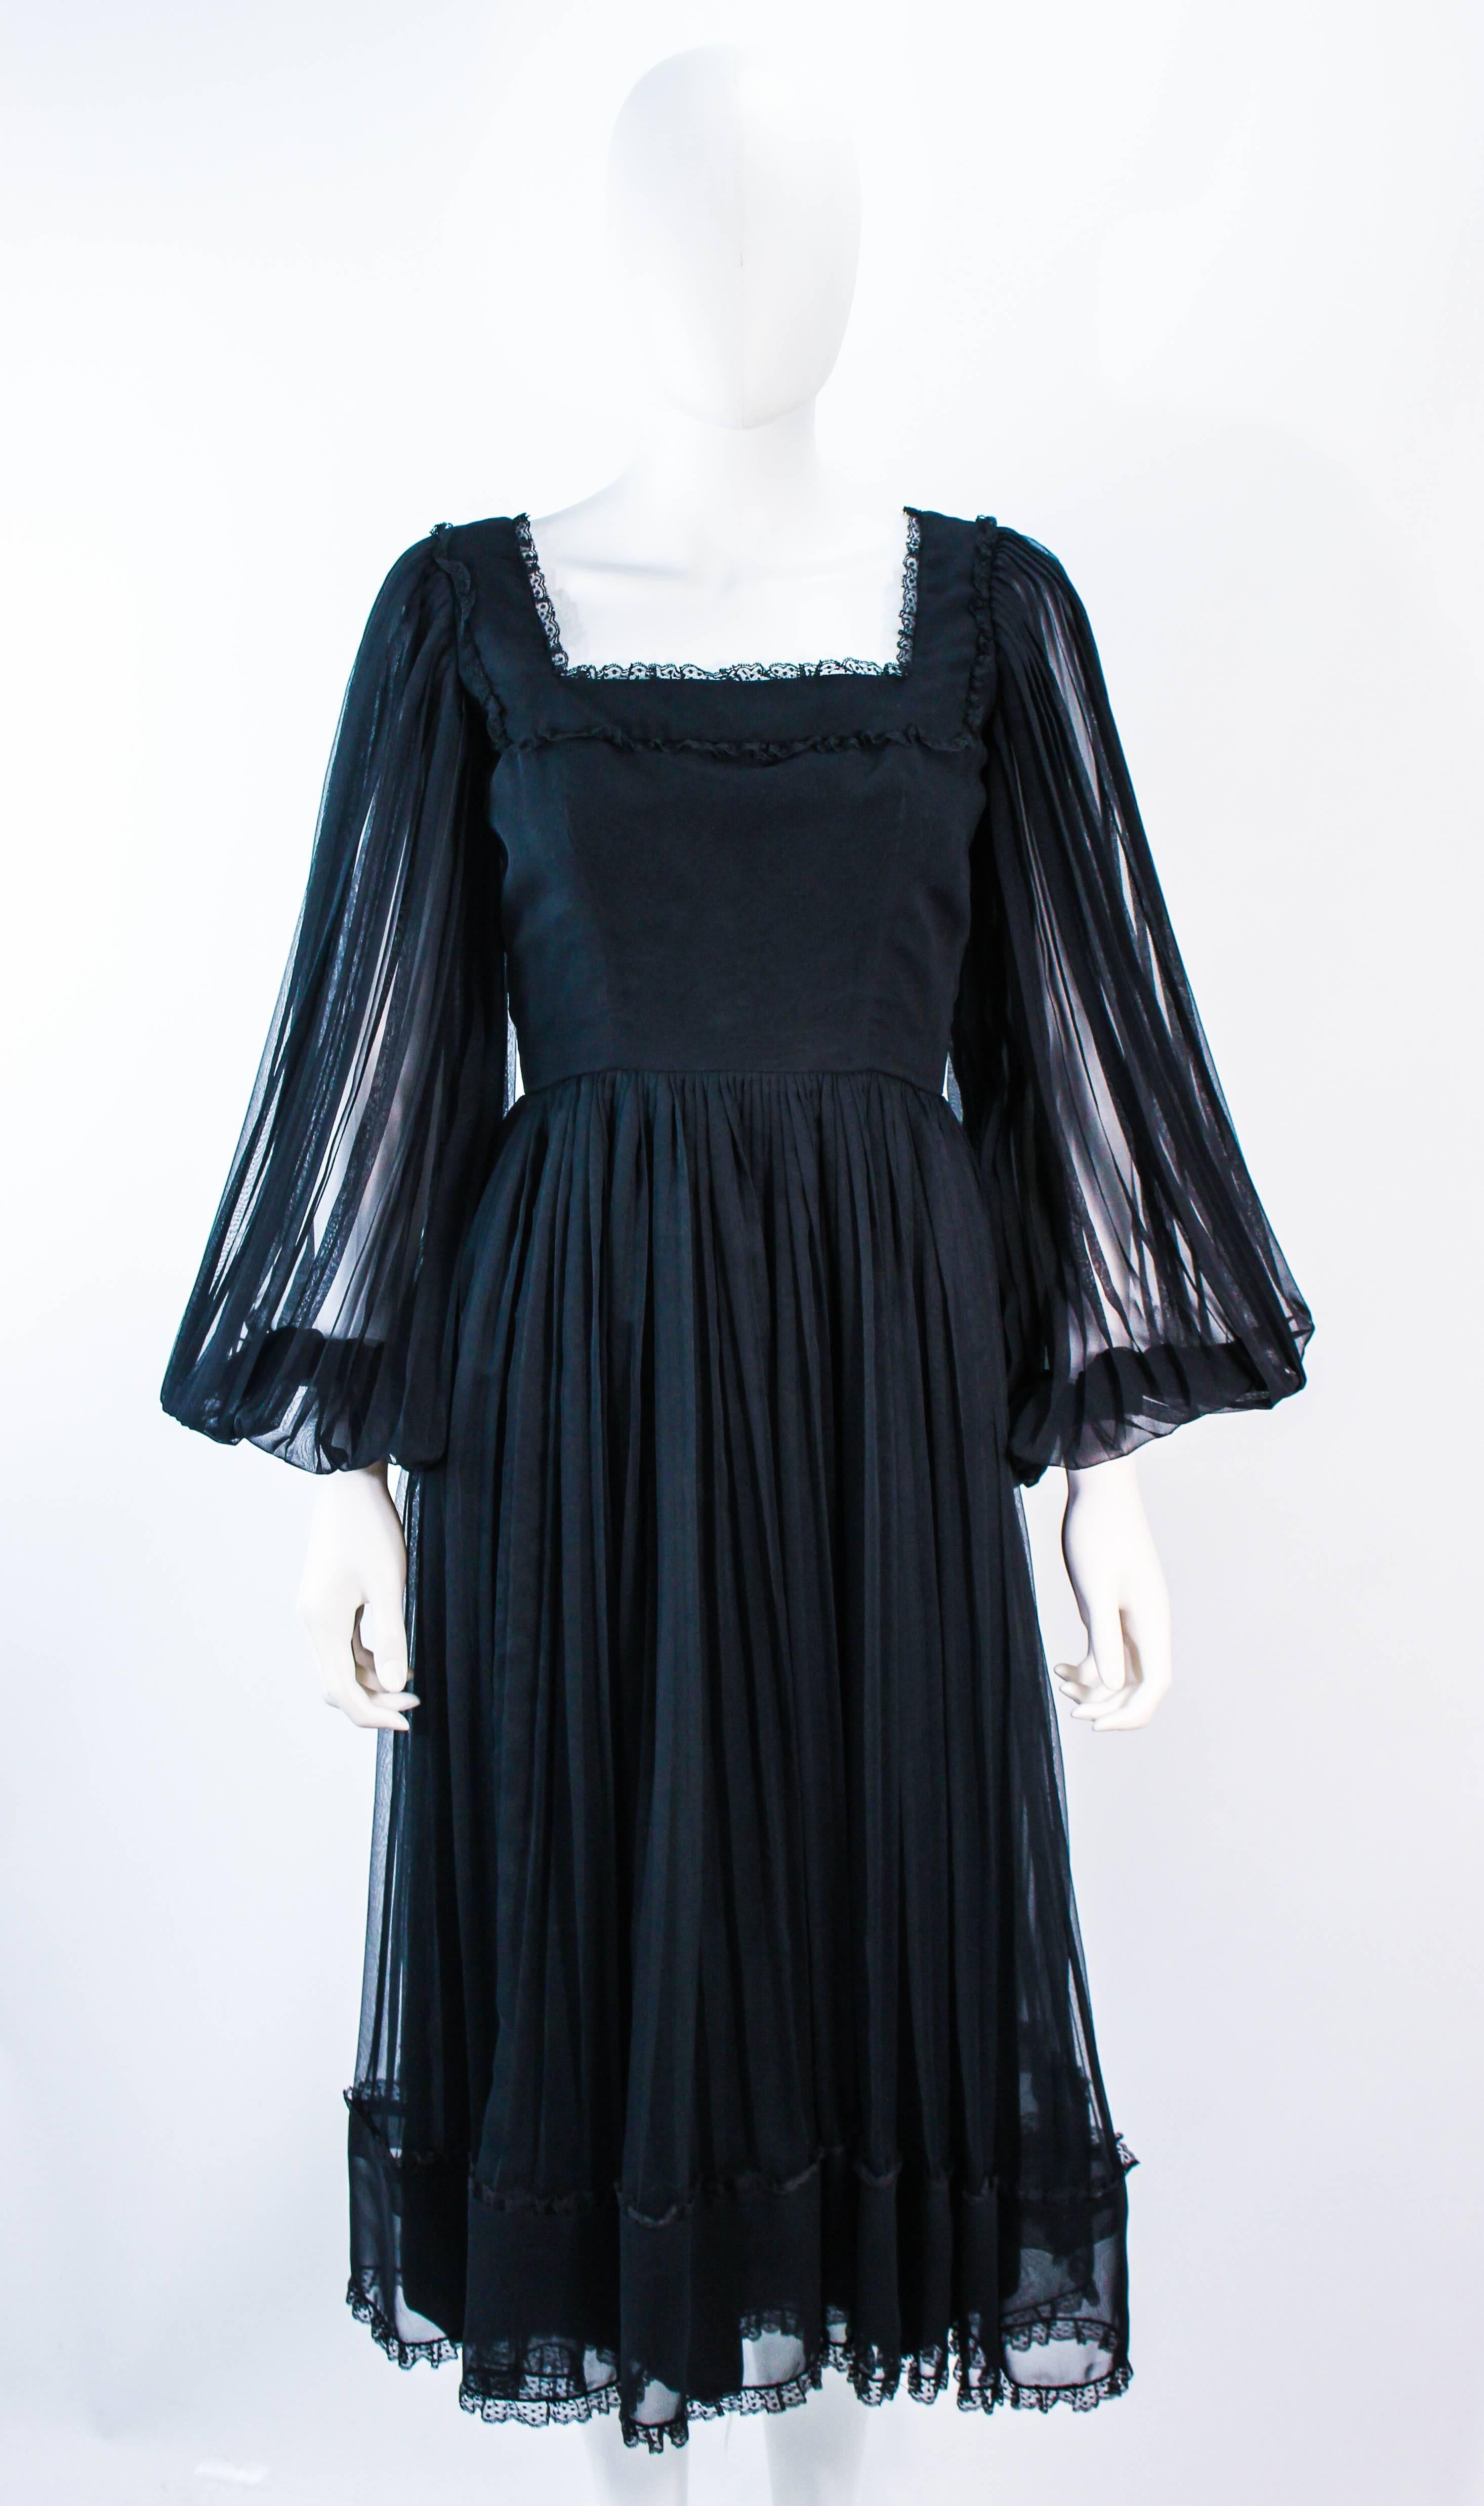 black dress with sheer sleeves